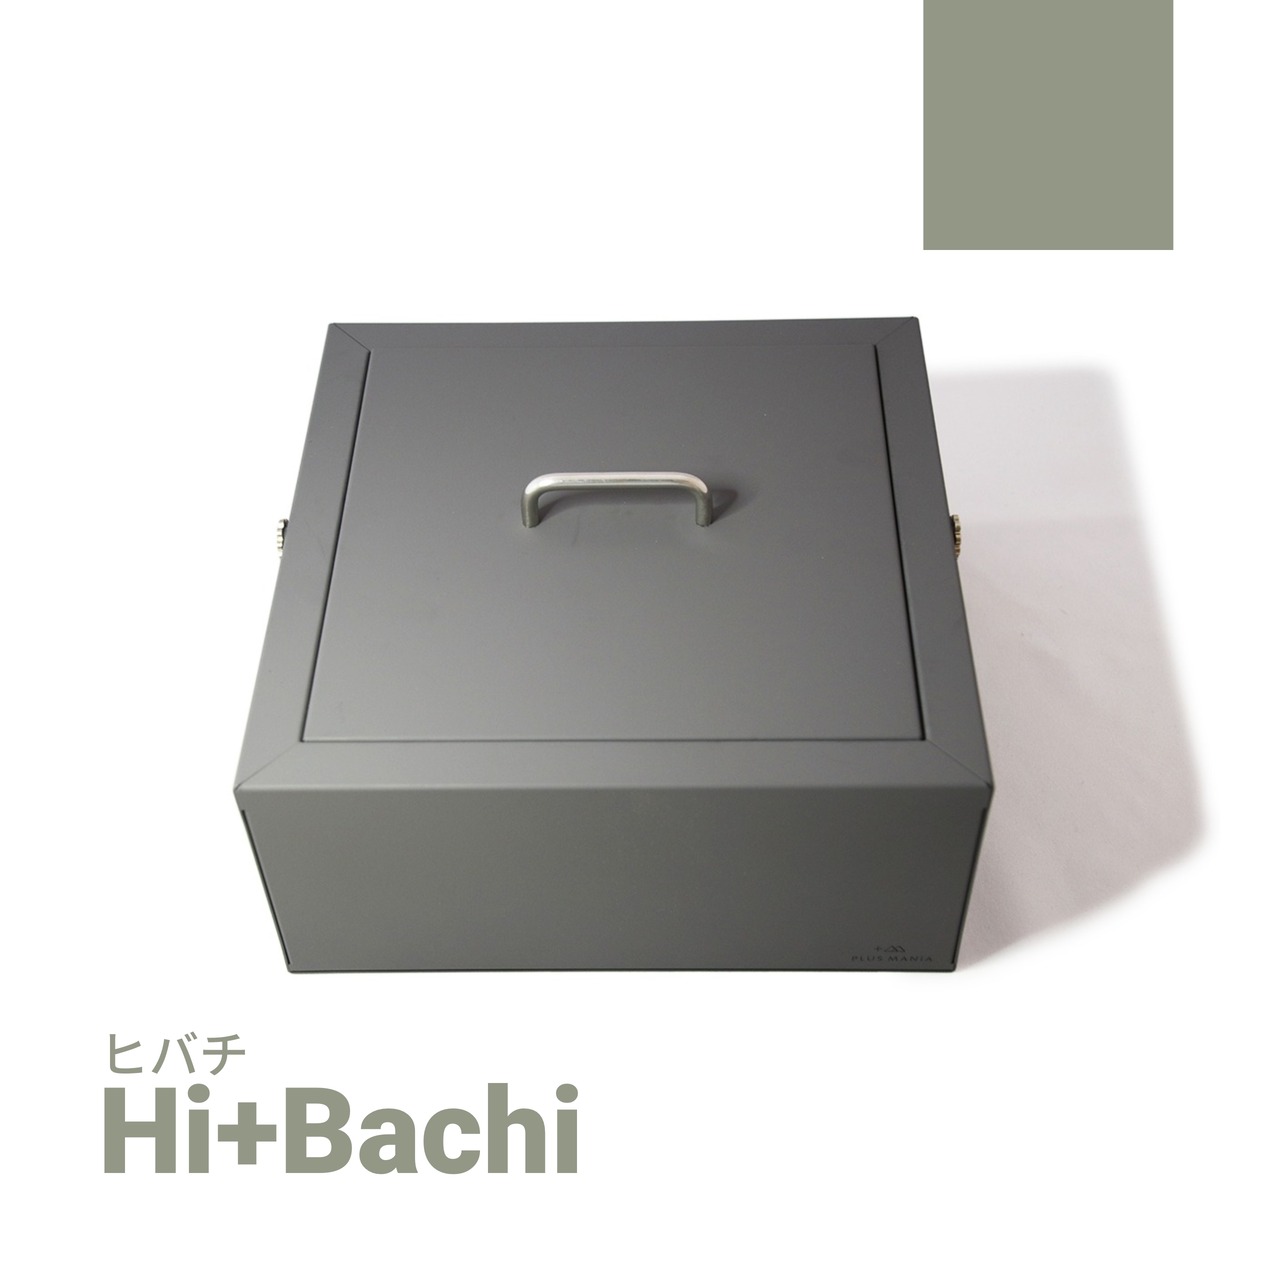 Hi+bachi [ヒバチ]